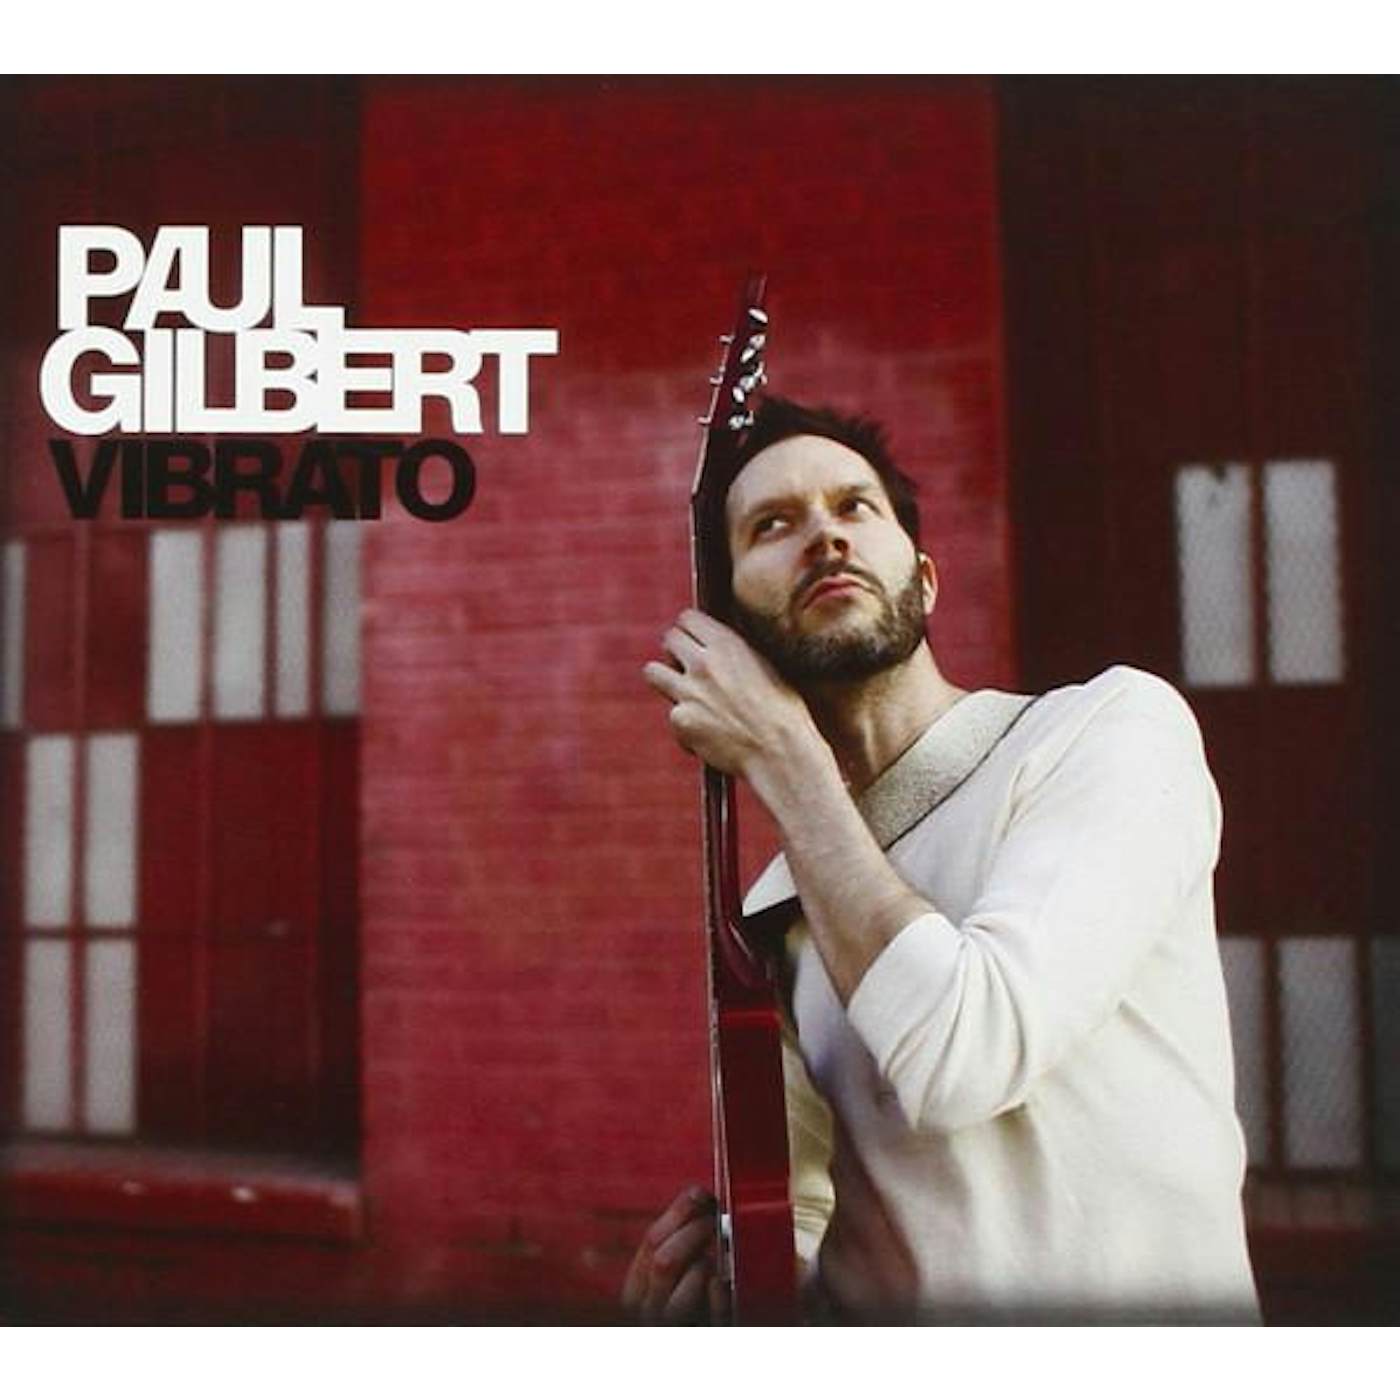 Paul Gilbert VIBRATO CD